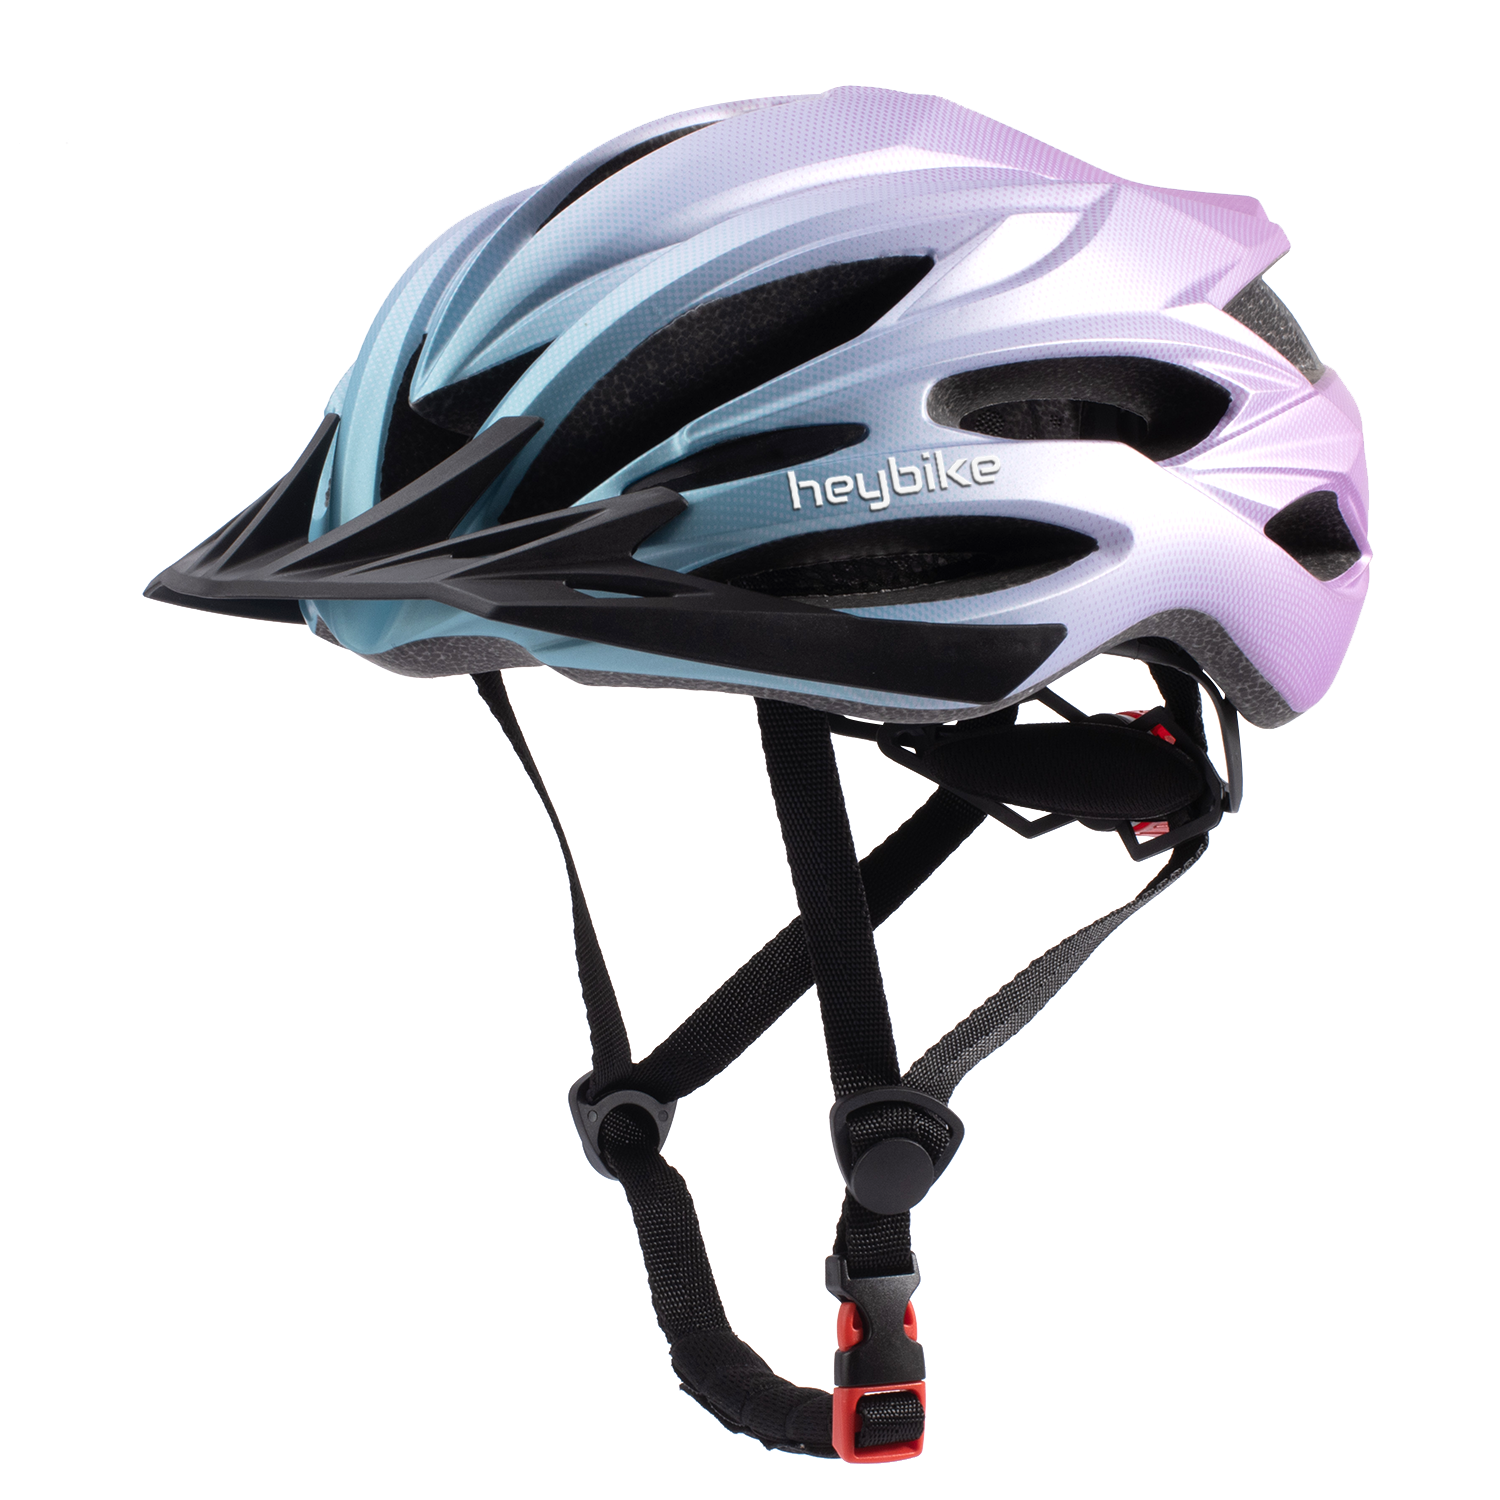 Mountain bike helmet